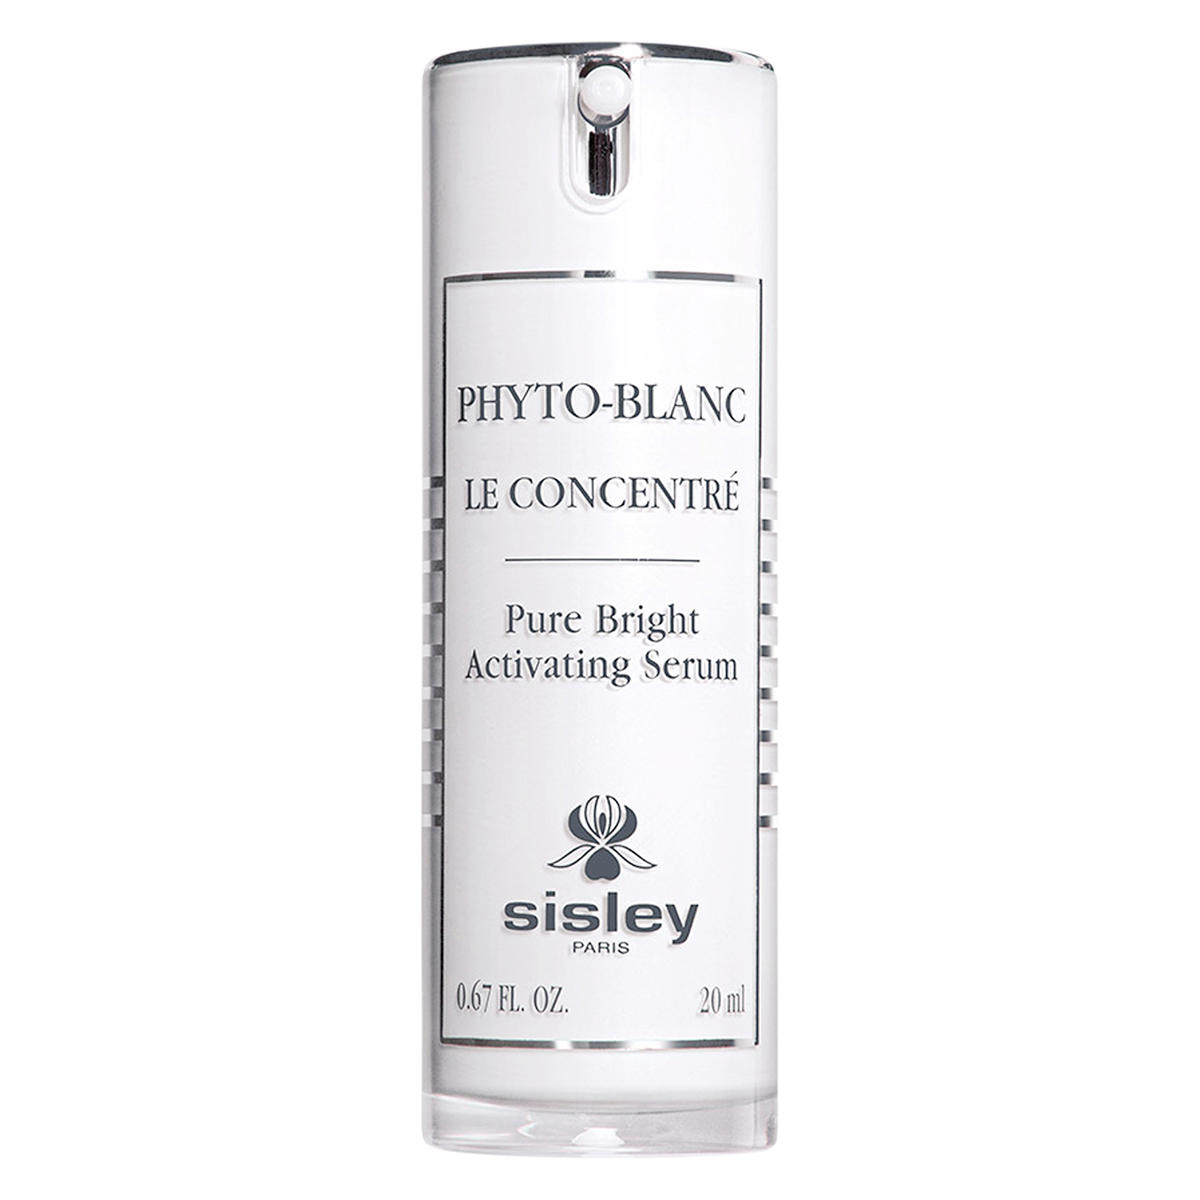 Sisley Paris Phyto-Blanc Phyto-Blanc Le Concentré Pure Bright Activating Serum 20 ml - 1